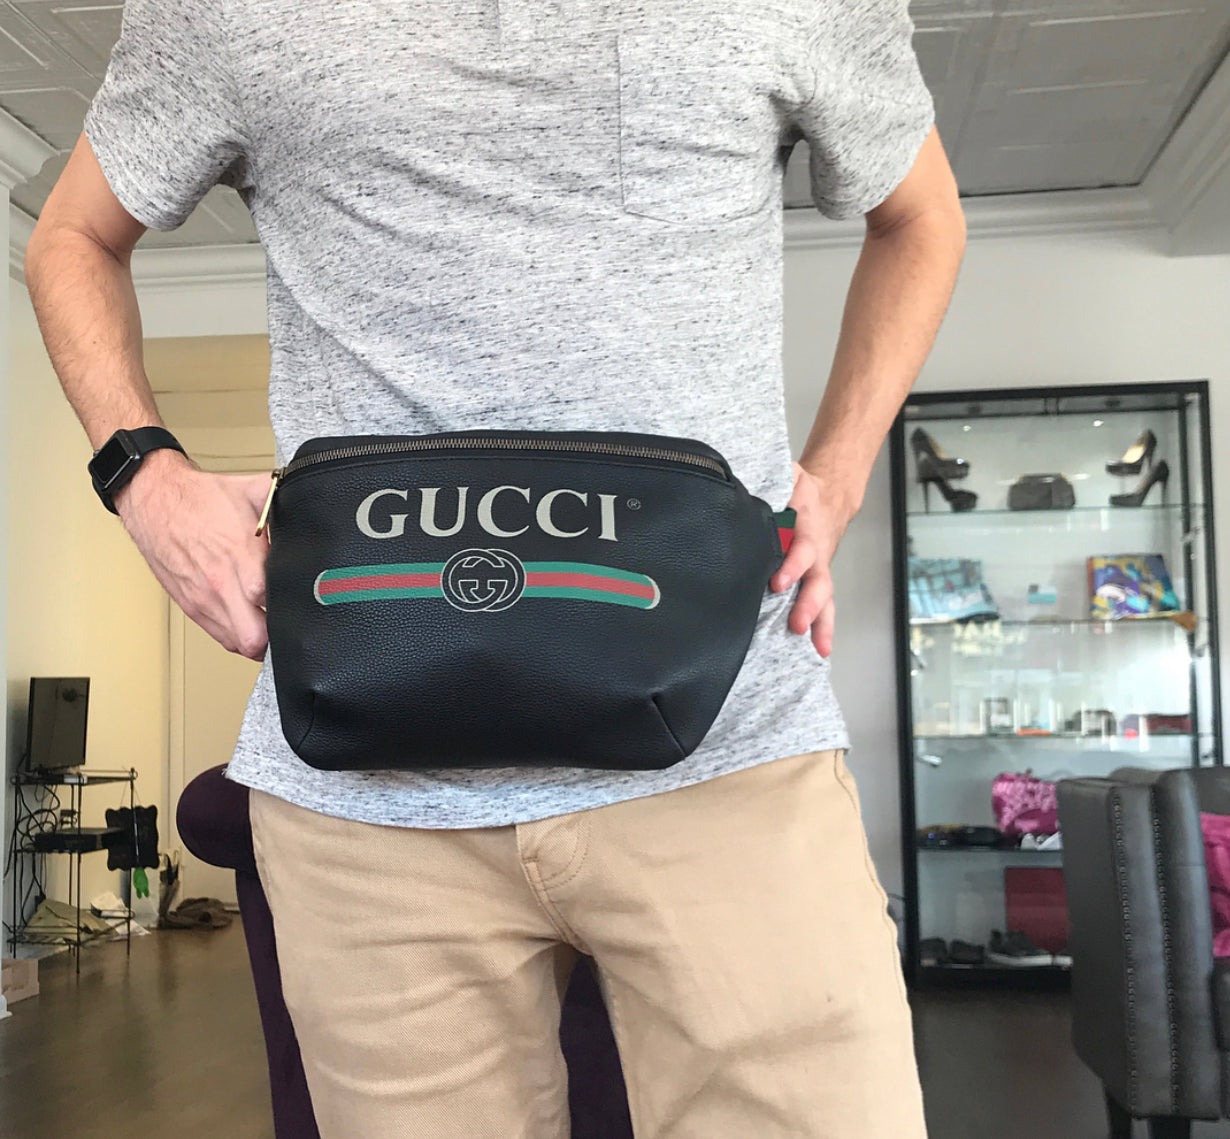 gucci bum bag large